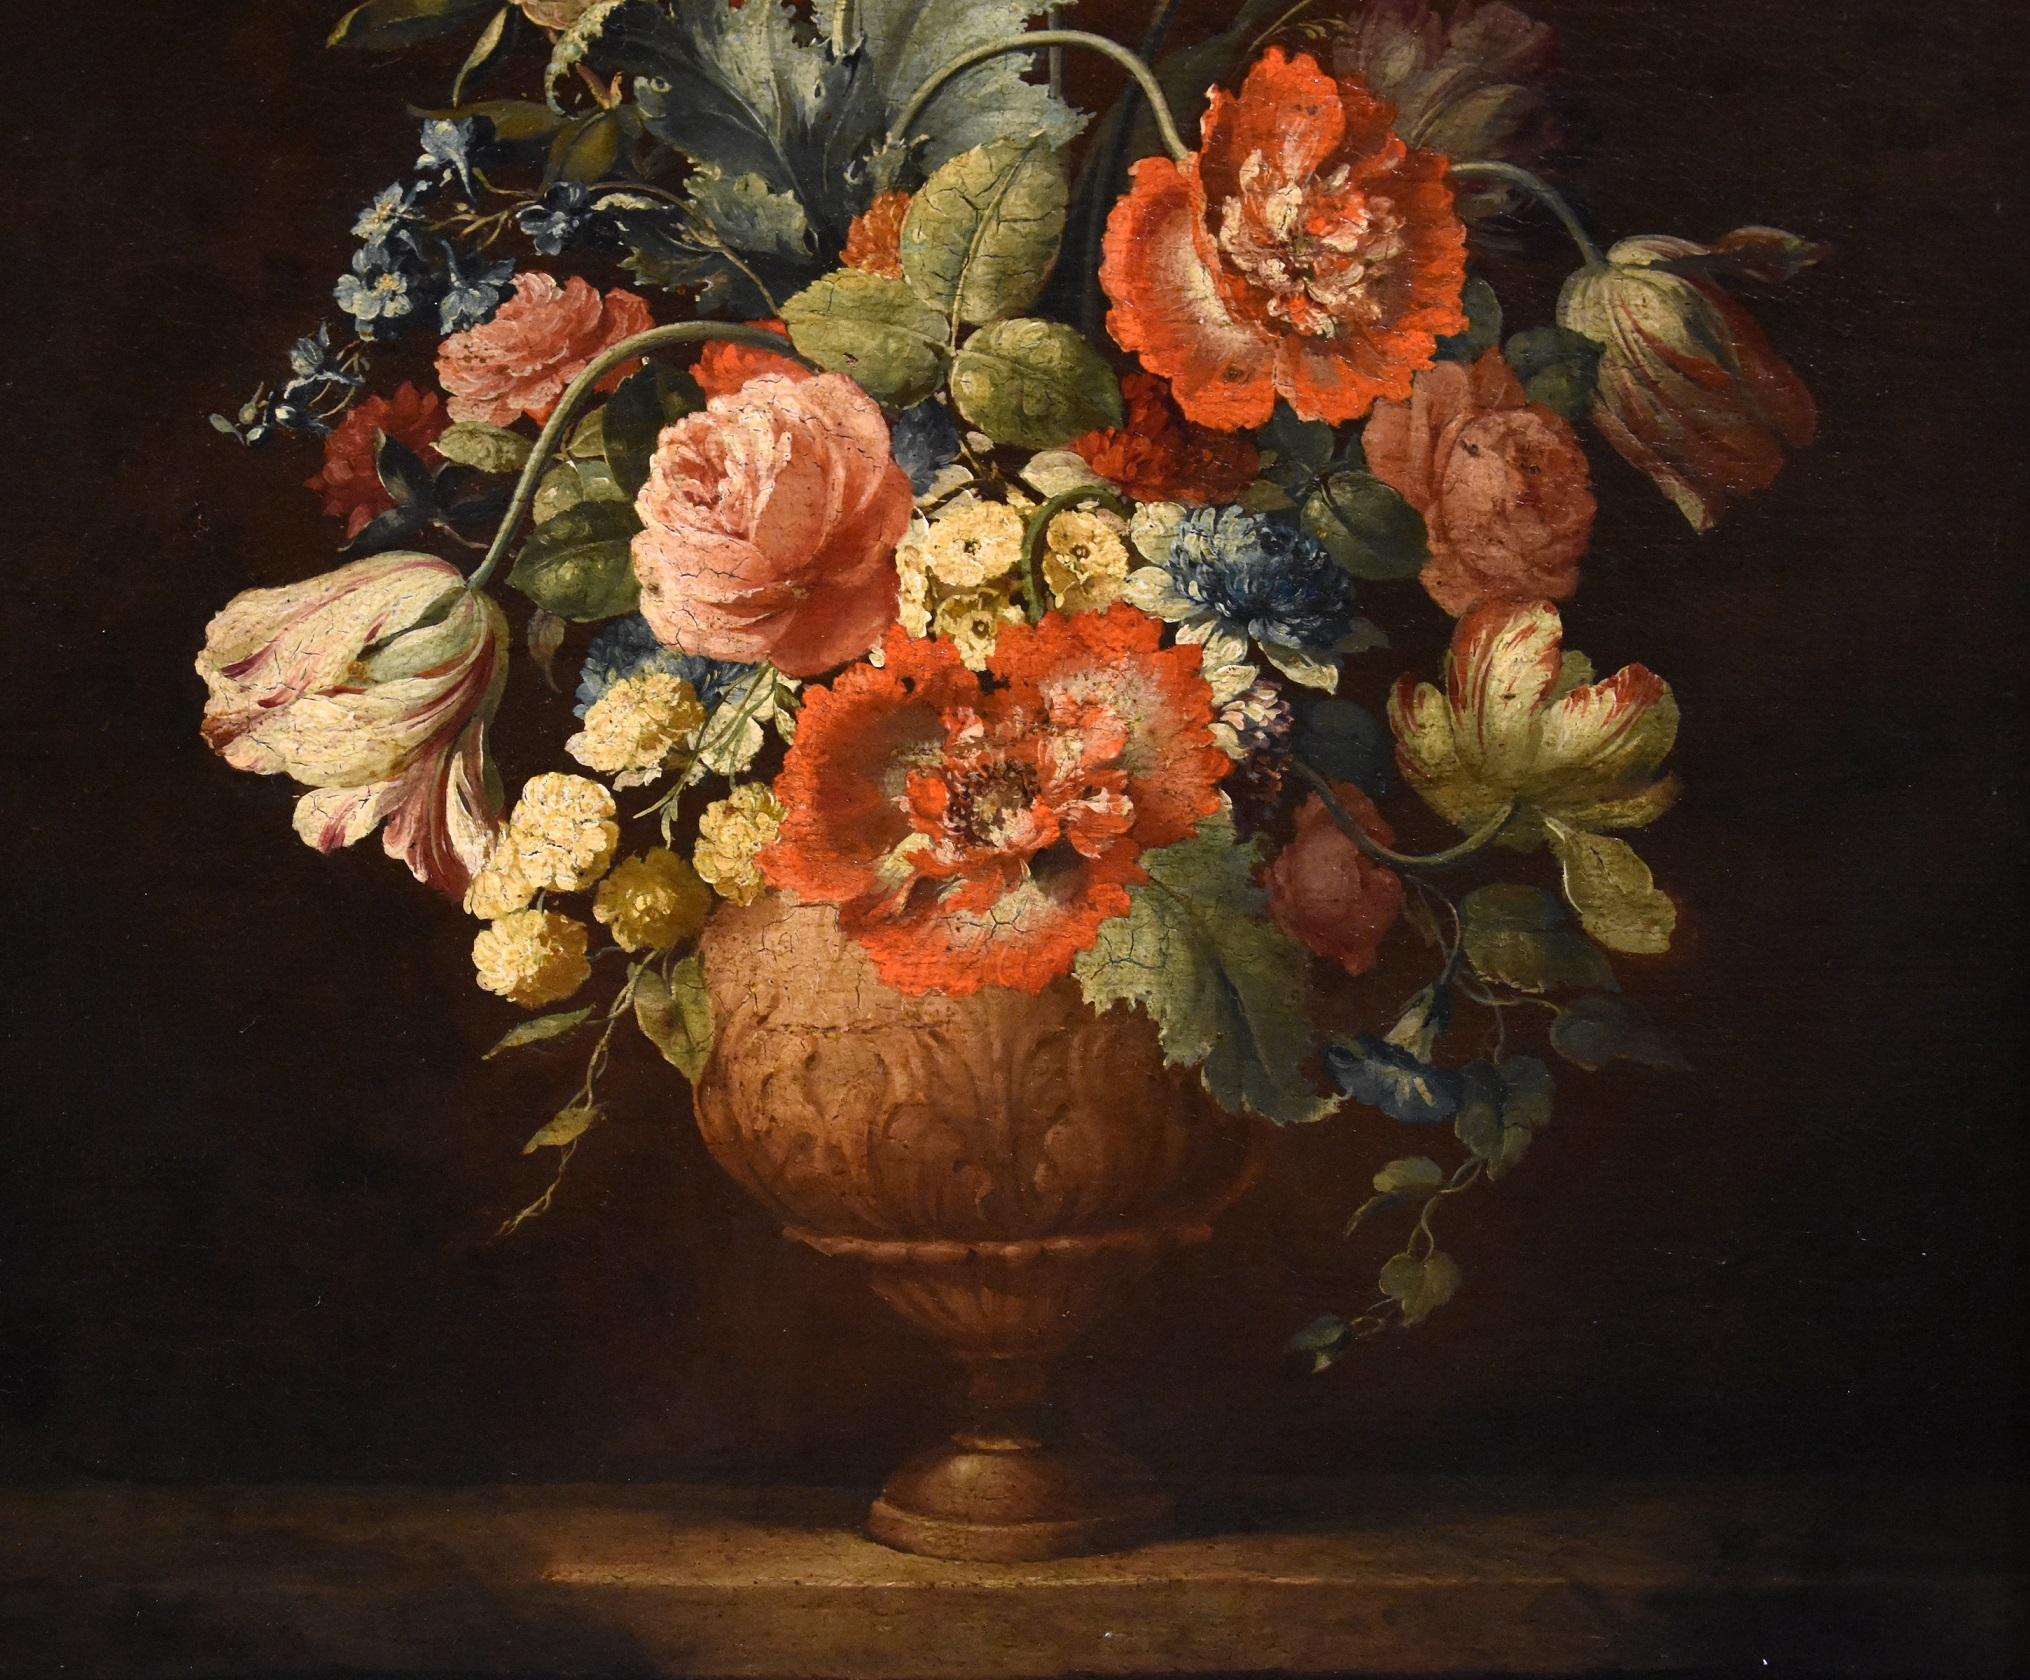 Still Life Flowers Van Huysum Paint Oil on canvas 18th Century Old master 1